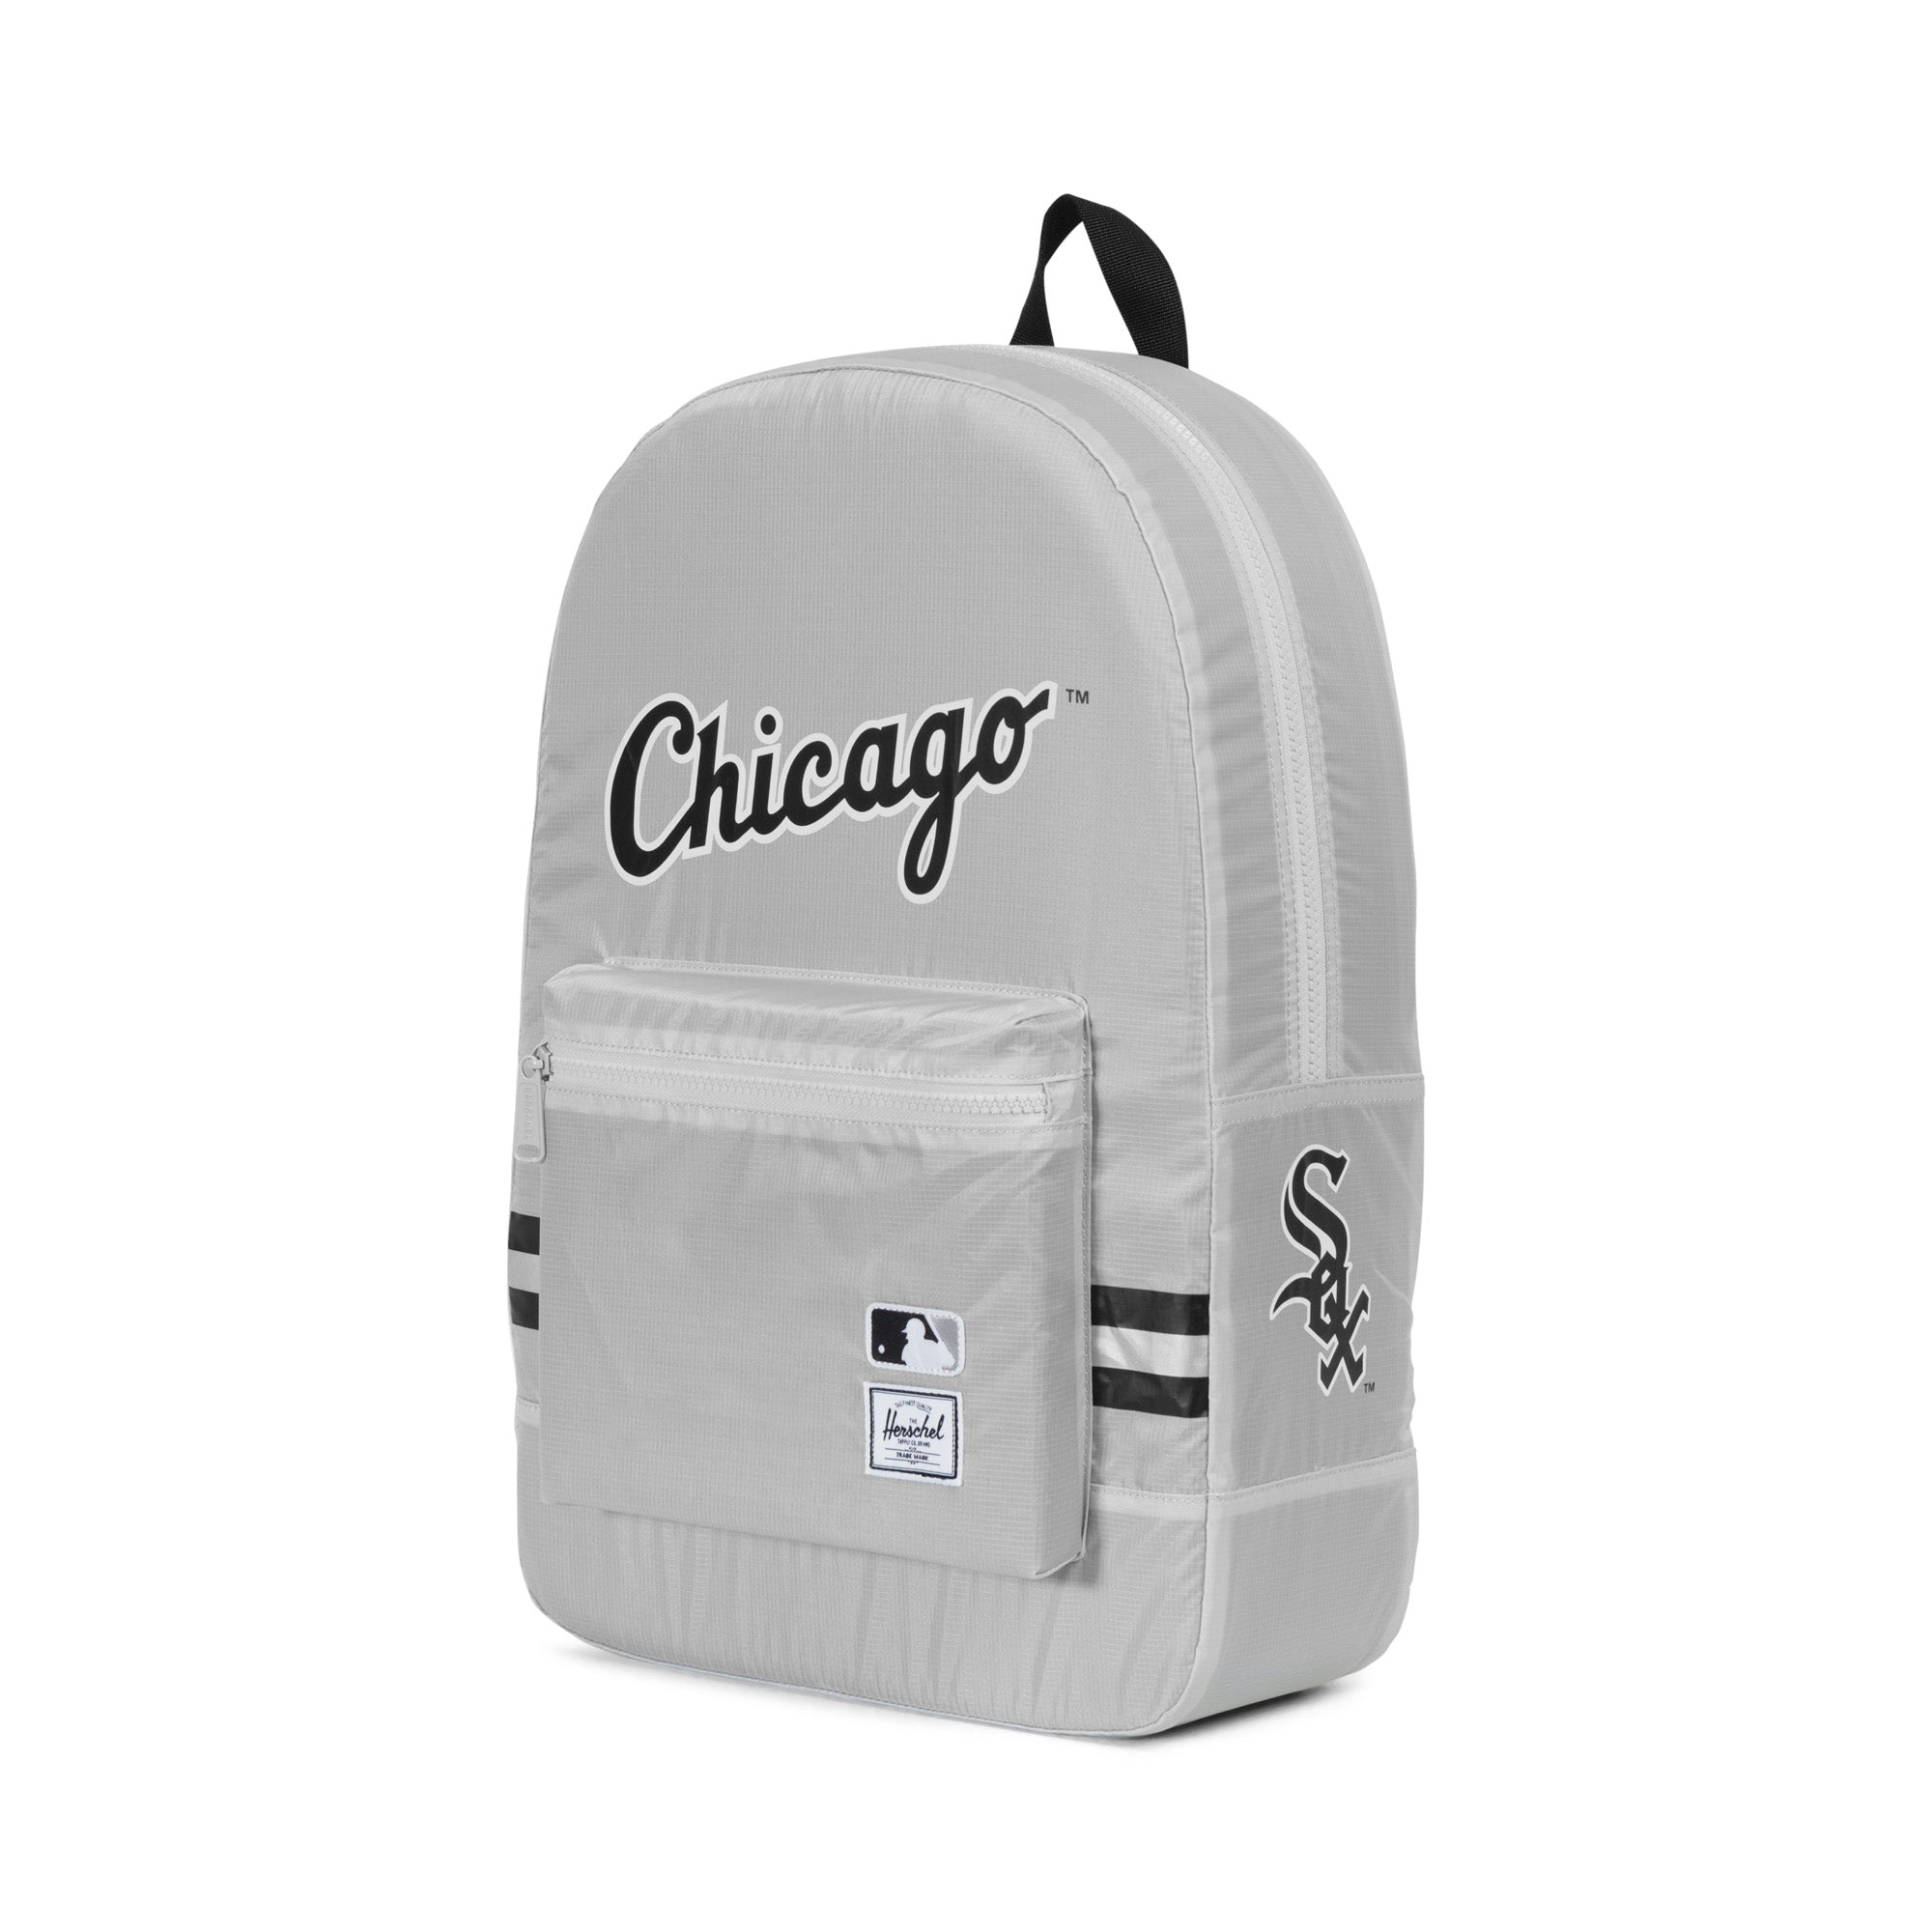 Herschel x MLB Chicago White Sox Heritage Backpack - Black - New Star